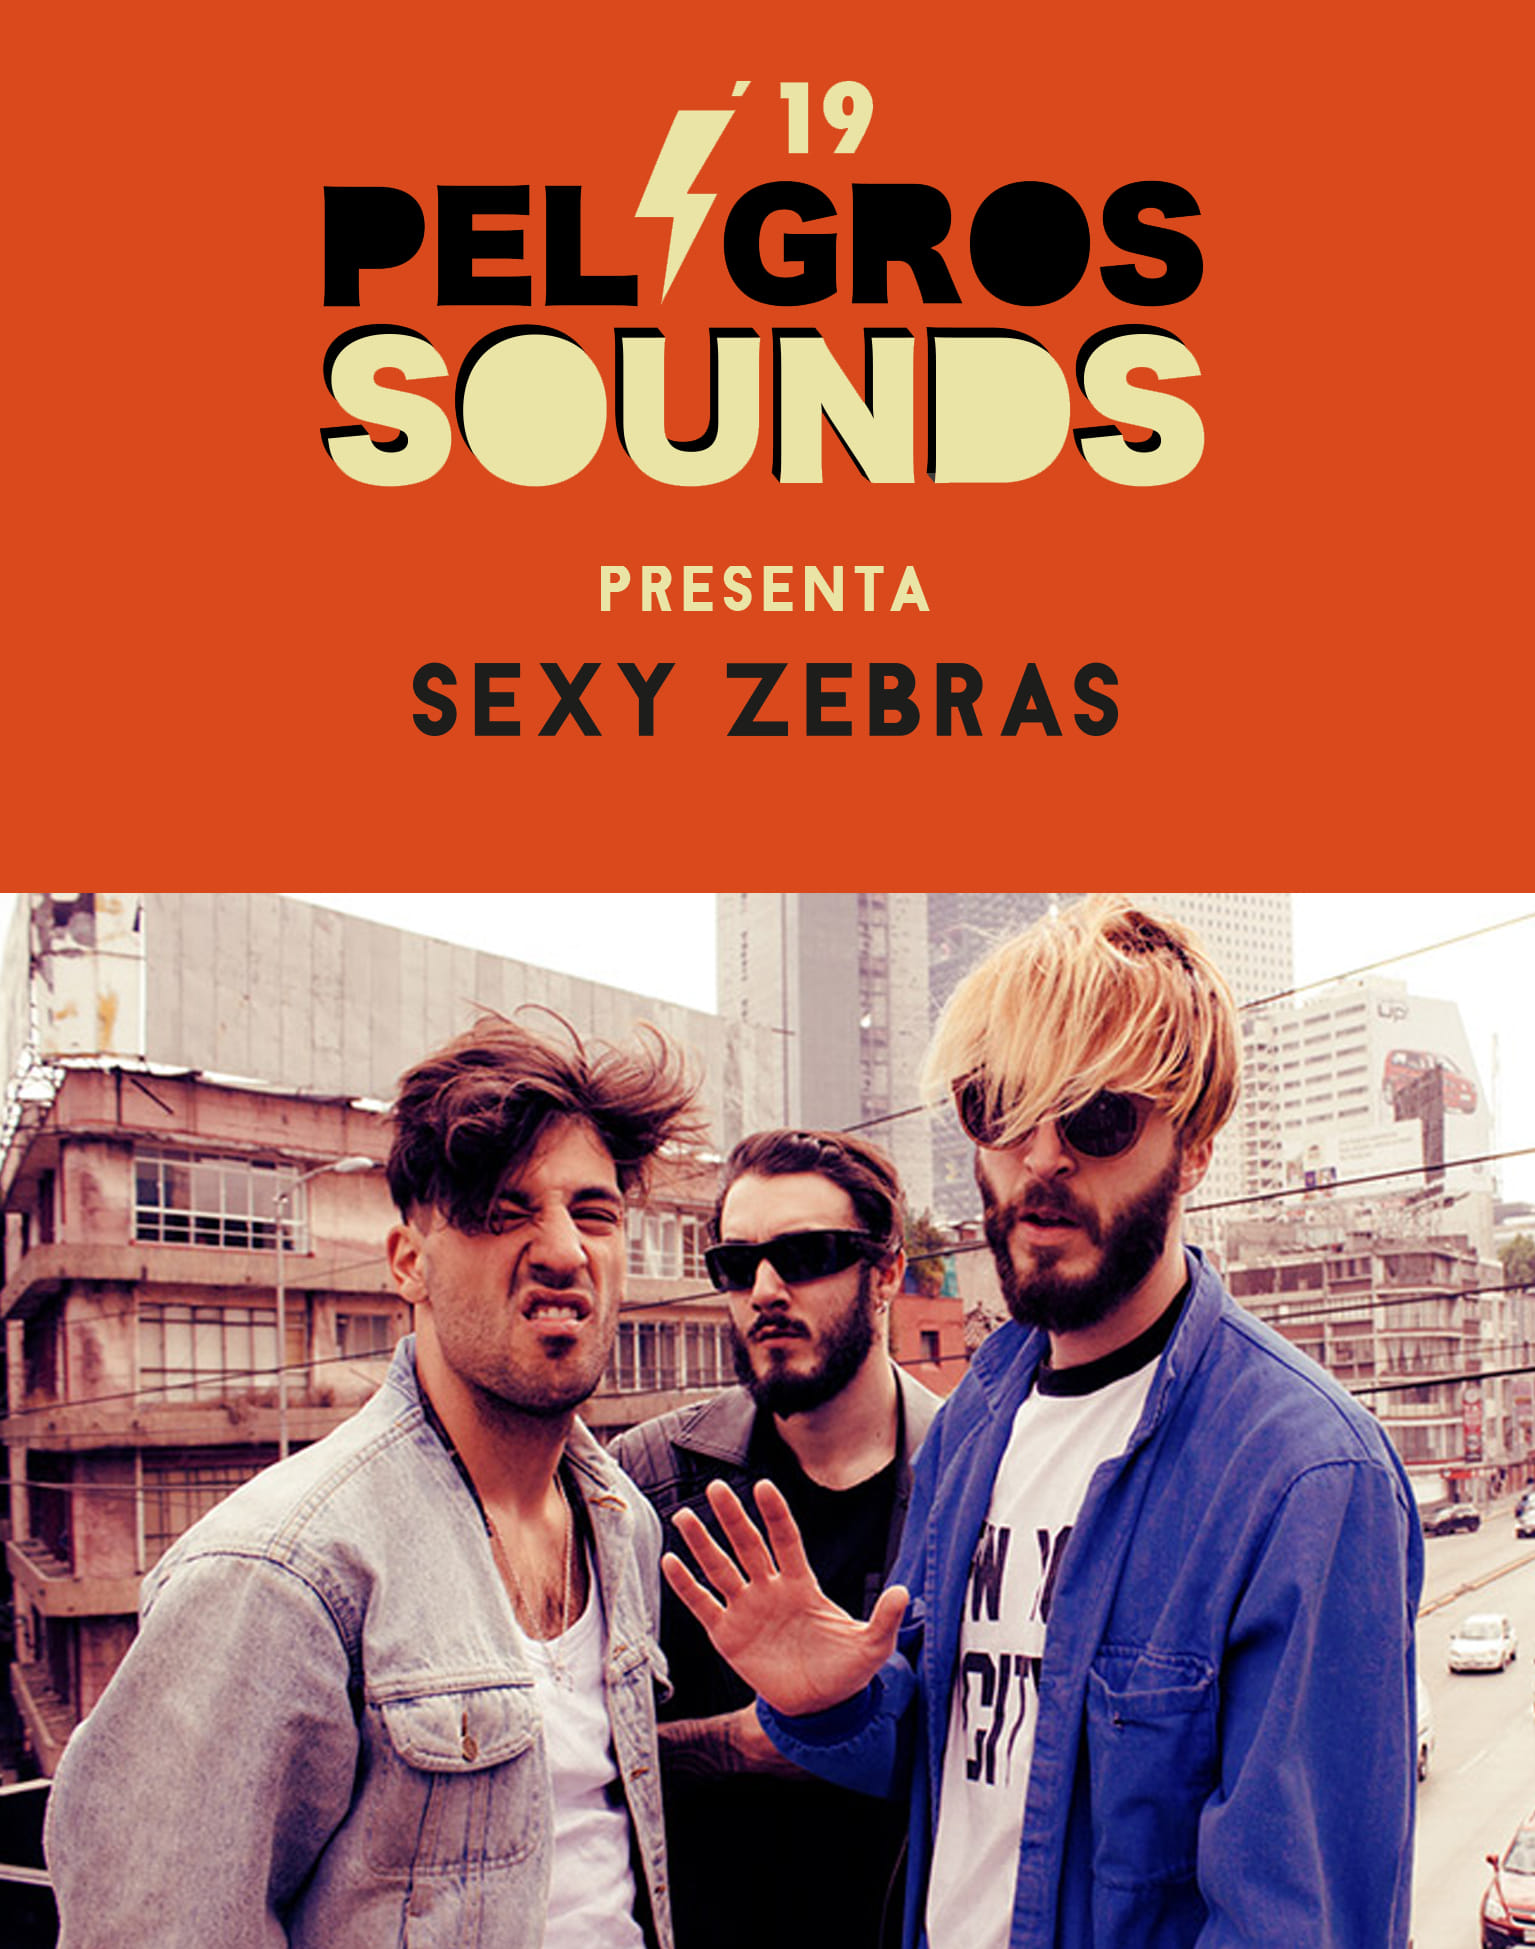 2019- Sexy Zebras en el festival peligros sounds